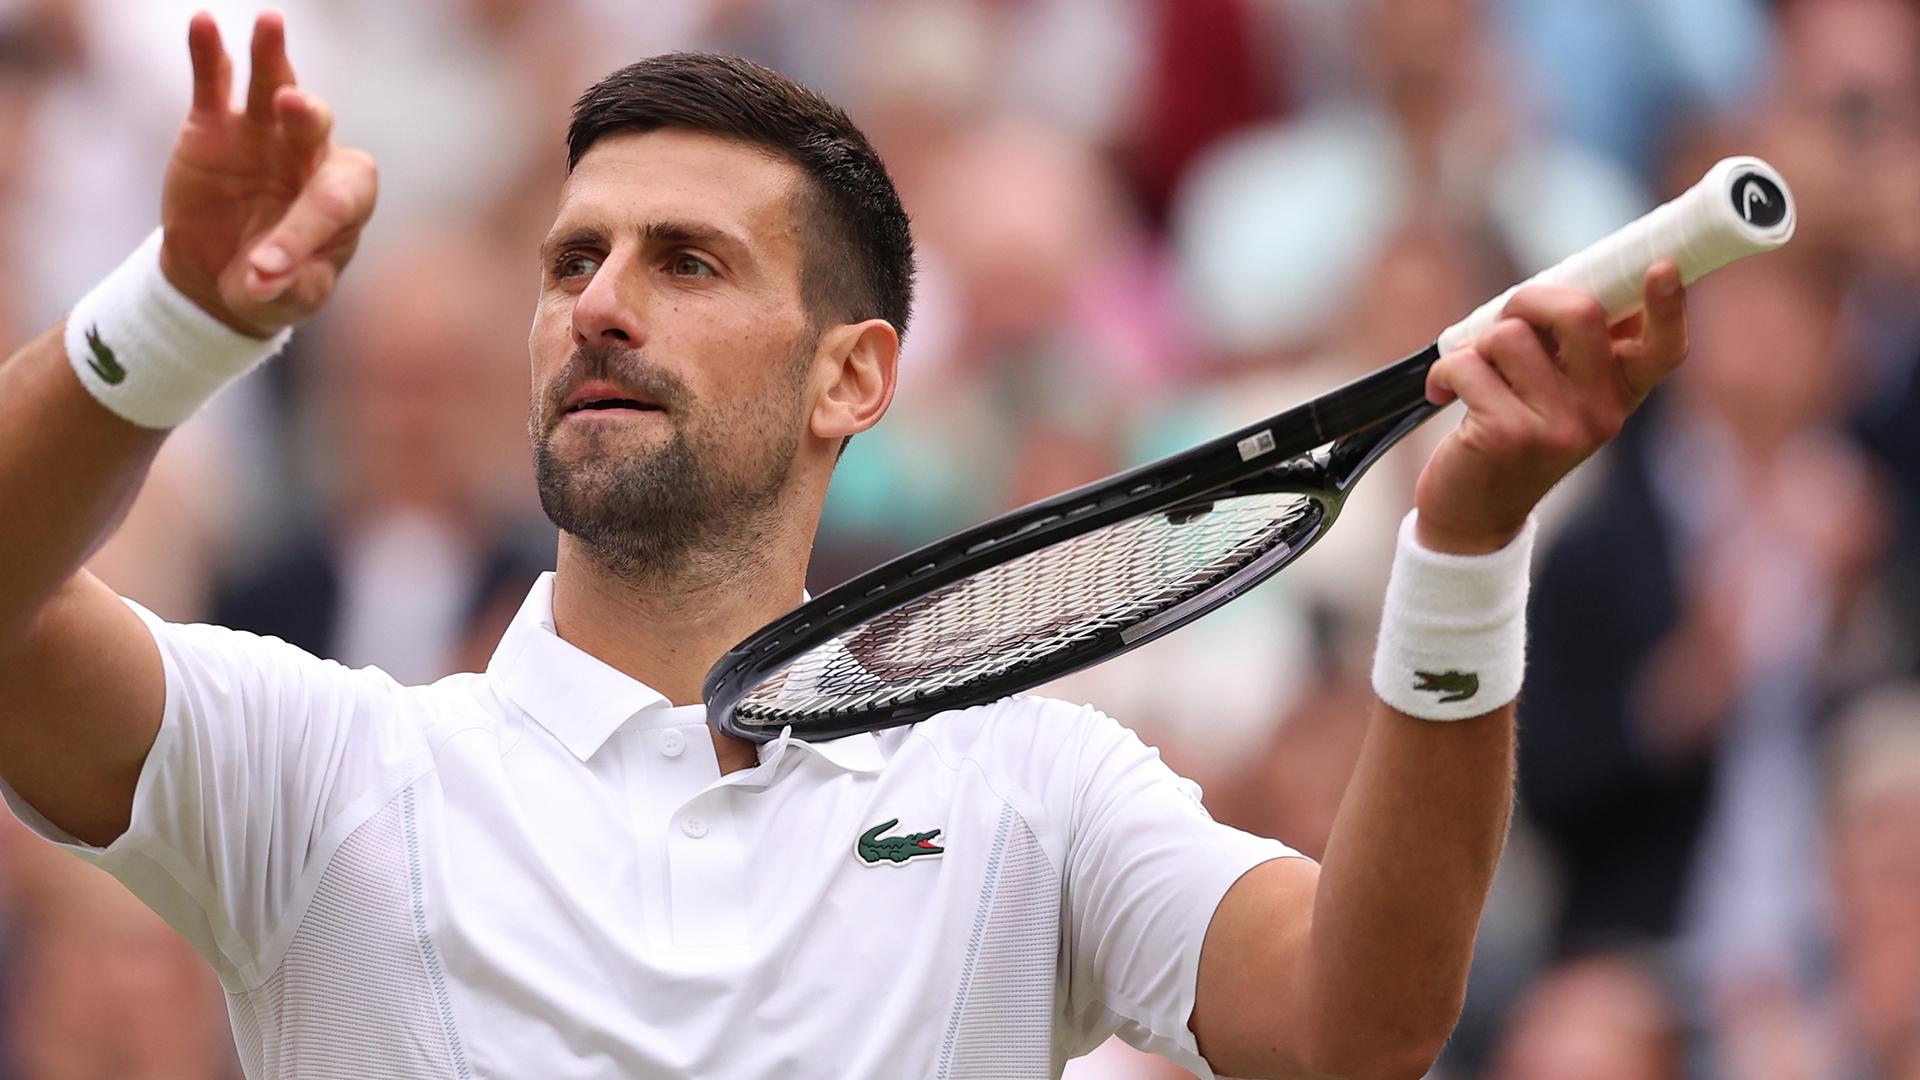 Djokovic wins in straight sets to reach 10th Wimbledon final